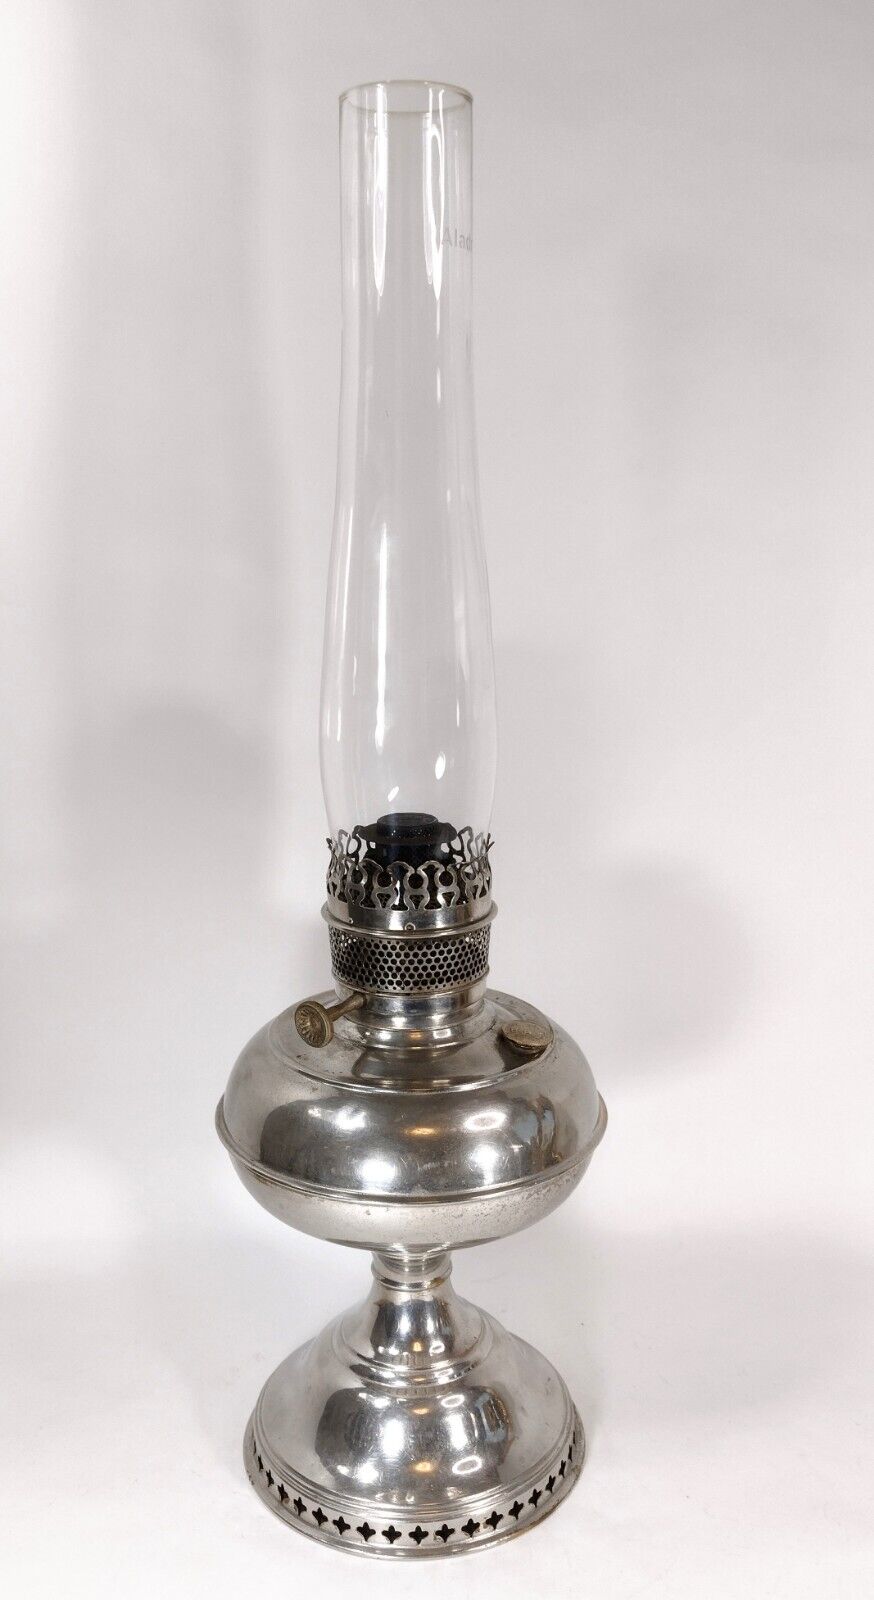 B & H Oil Lamp Silver Nickel Finish  Aladdin Chimney Wick Vintage See Photos 